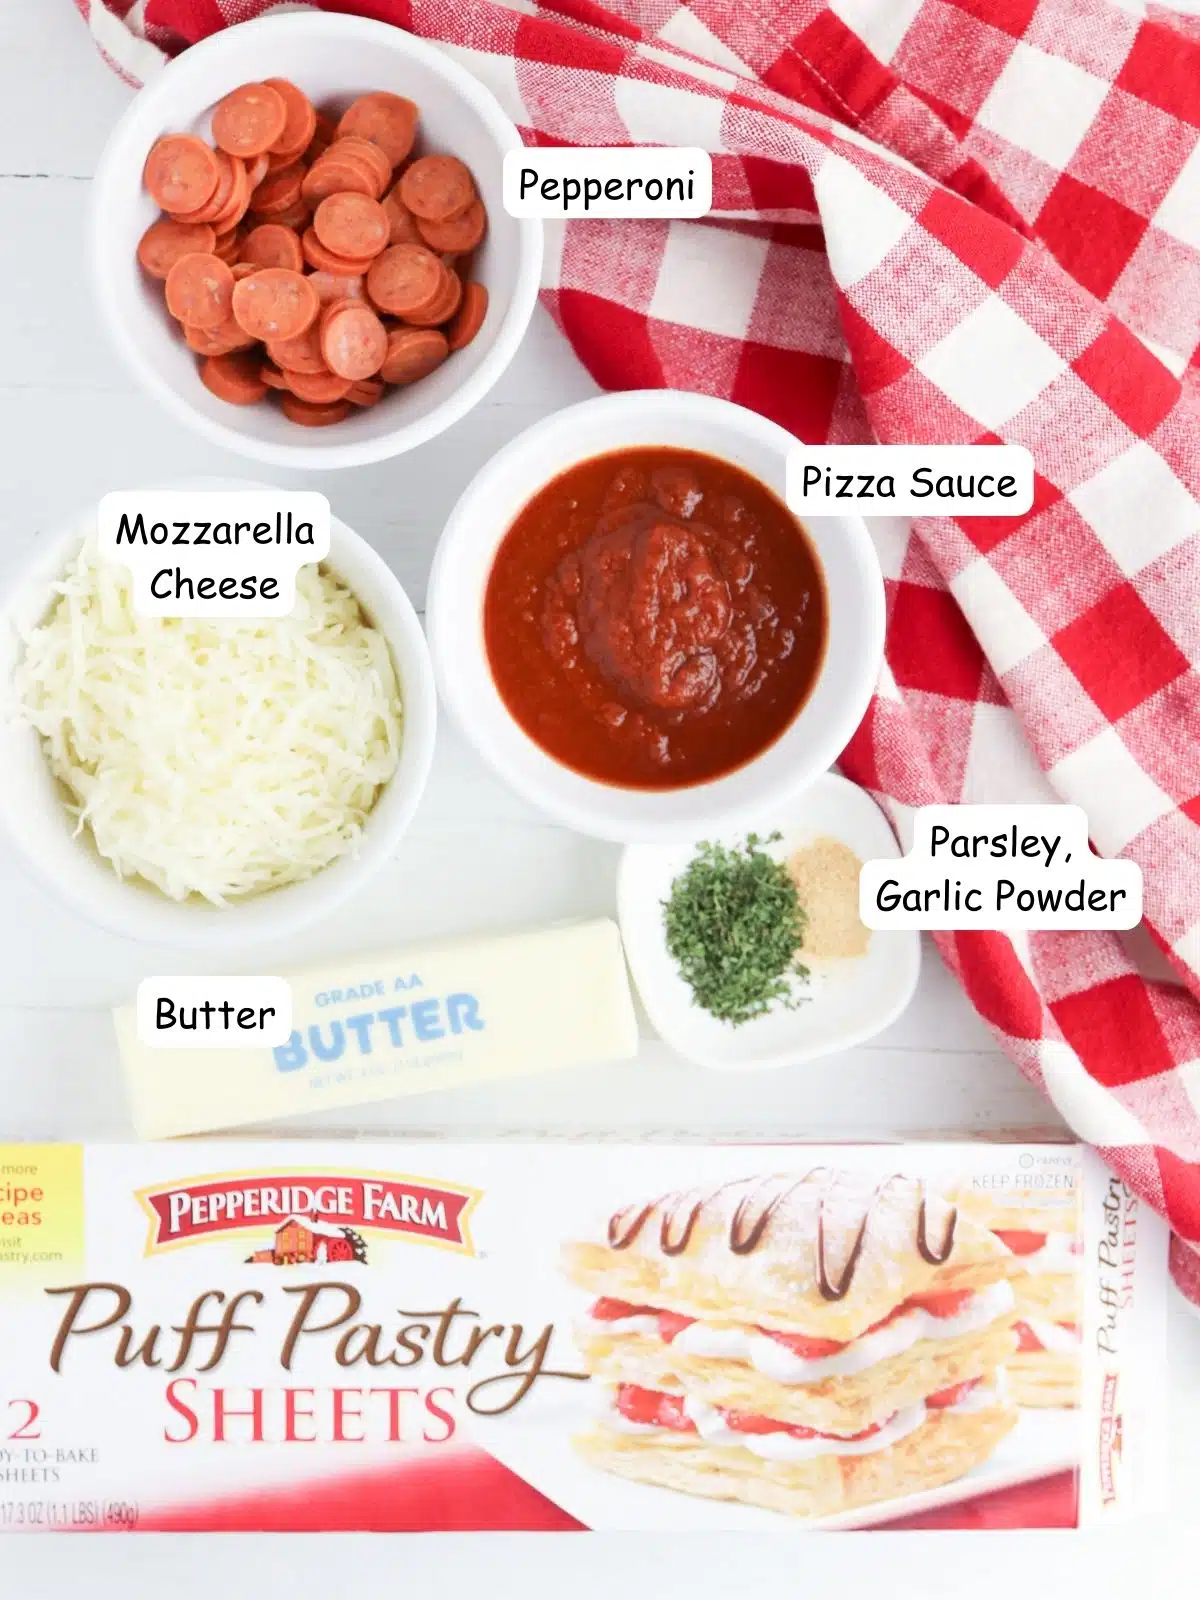 Ingredients to make mini pizza puffs